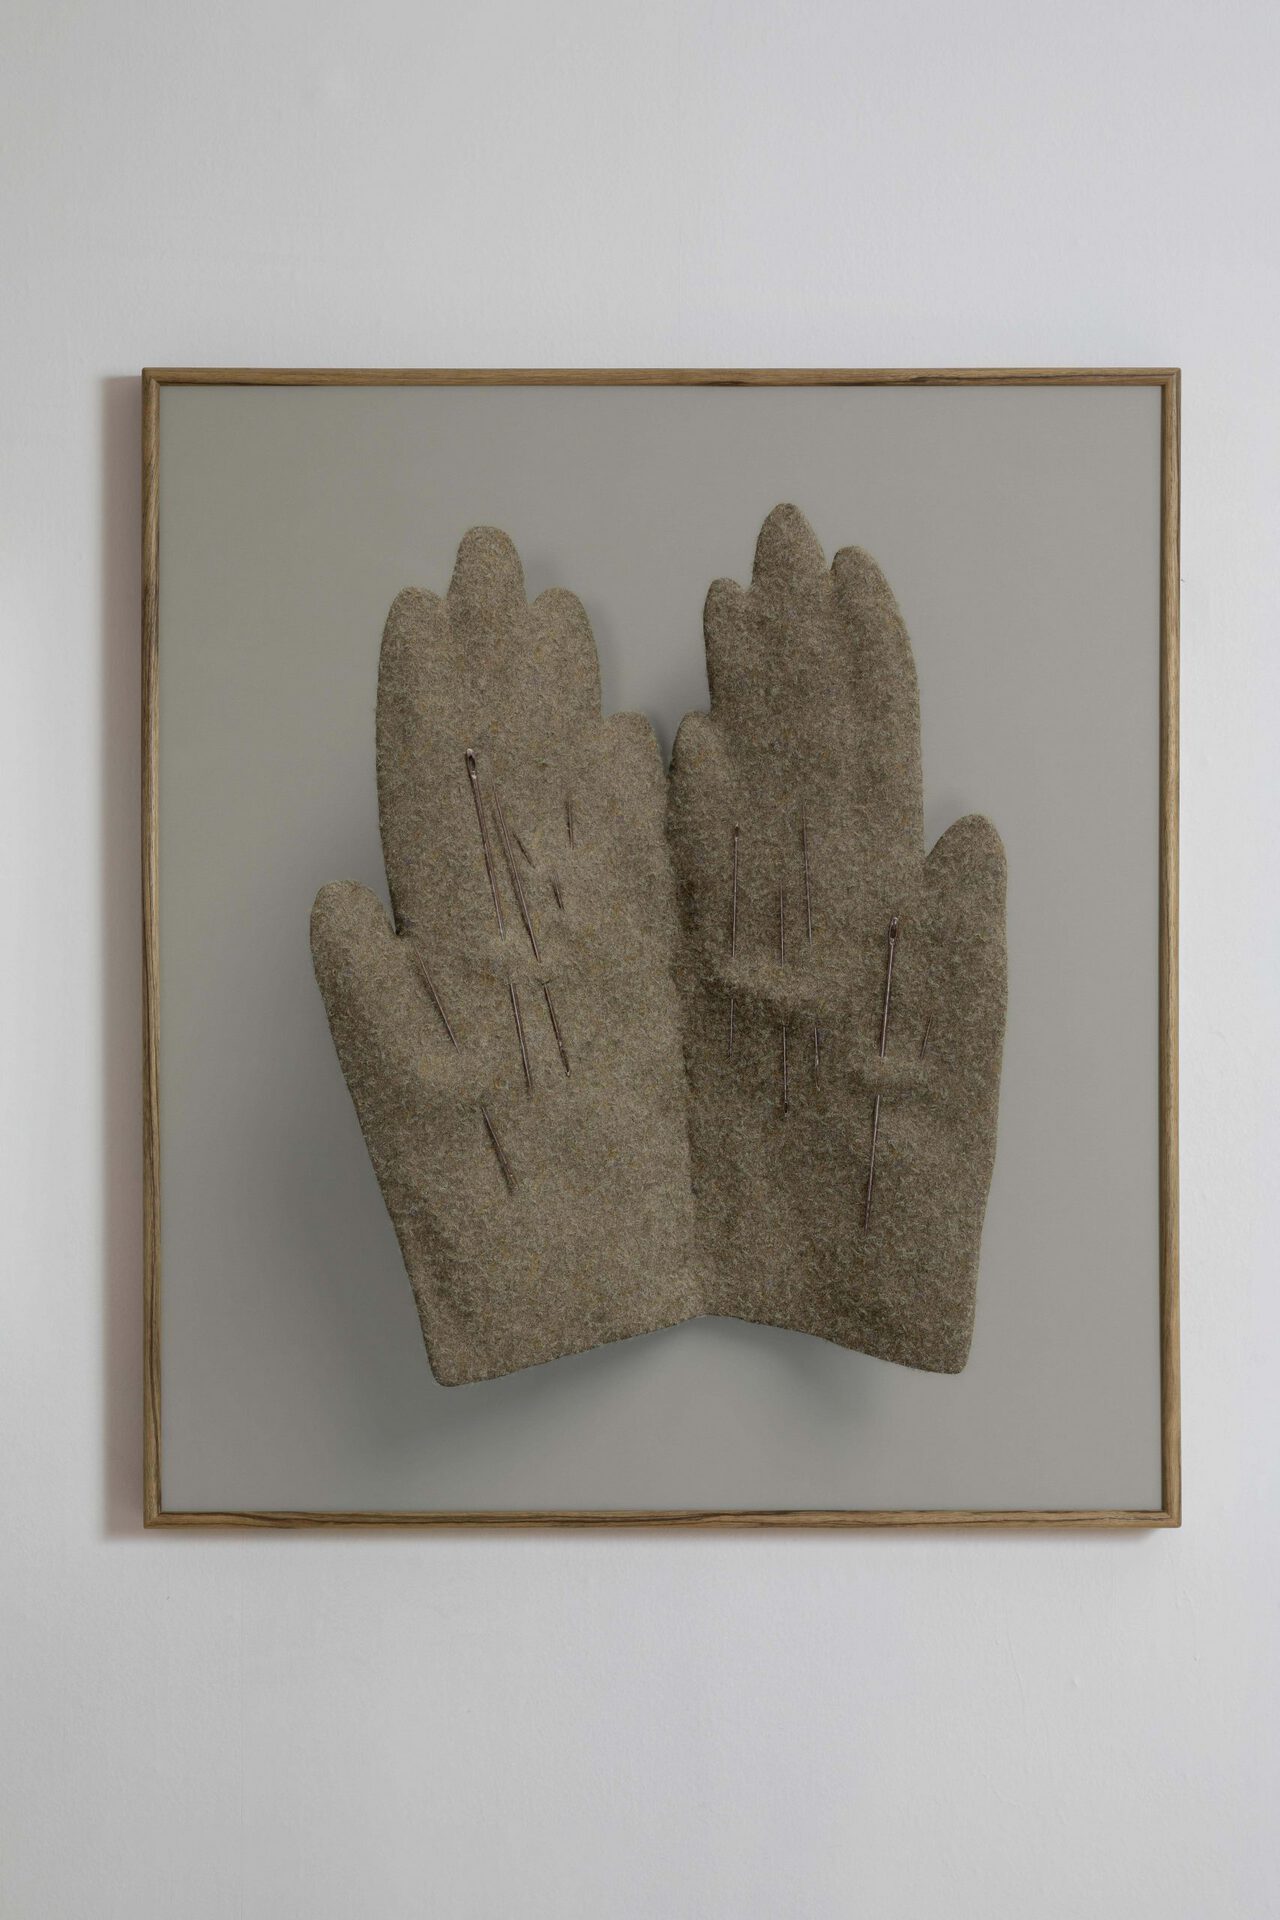 Adi Fluman, Untitled, 2021. Digital sculpture, inkjet printed on paper in artist’s frame (African walnut wood), 122.5×109.5×8 cm. Photo: Tal Nisim. Courtesy of the artist and Dvir Gallery, Tel Aviv/Brussels.